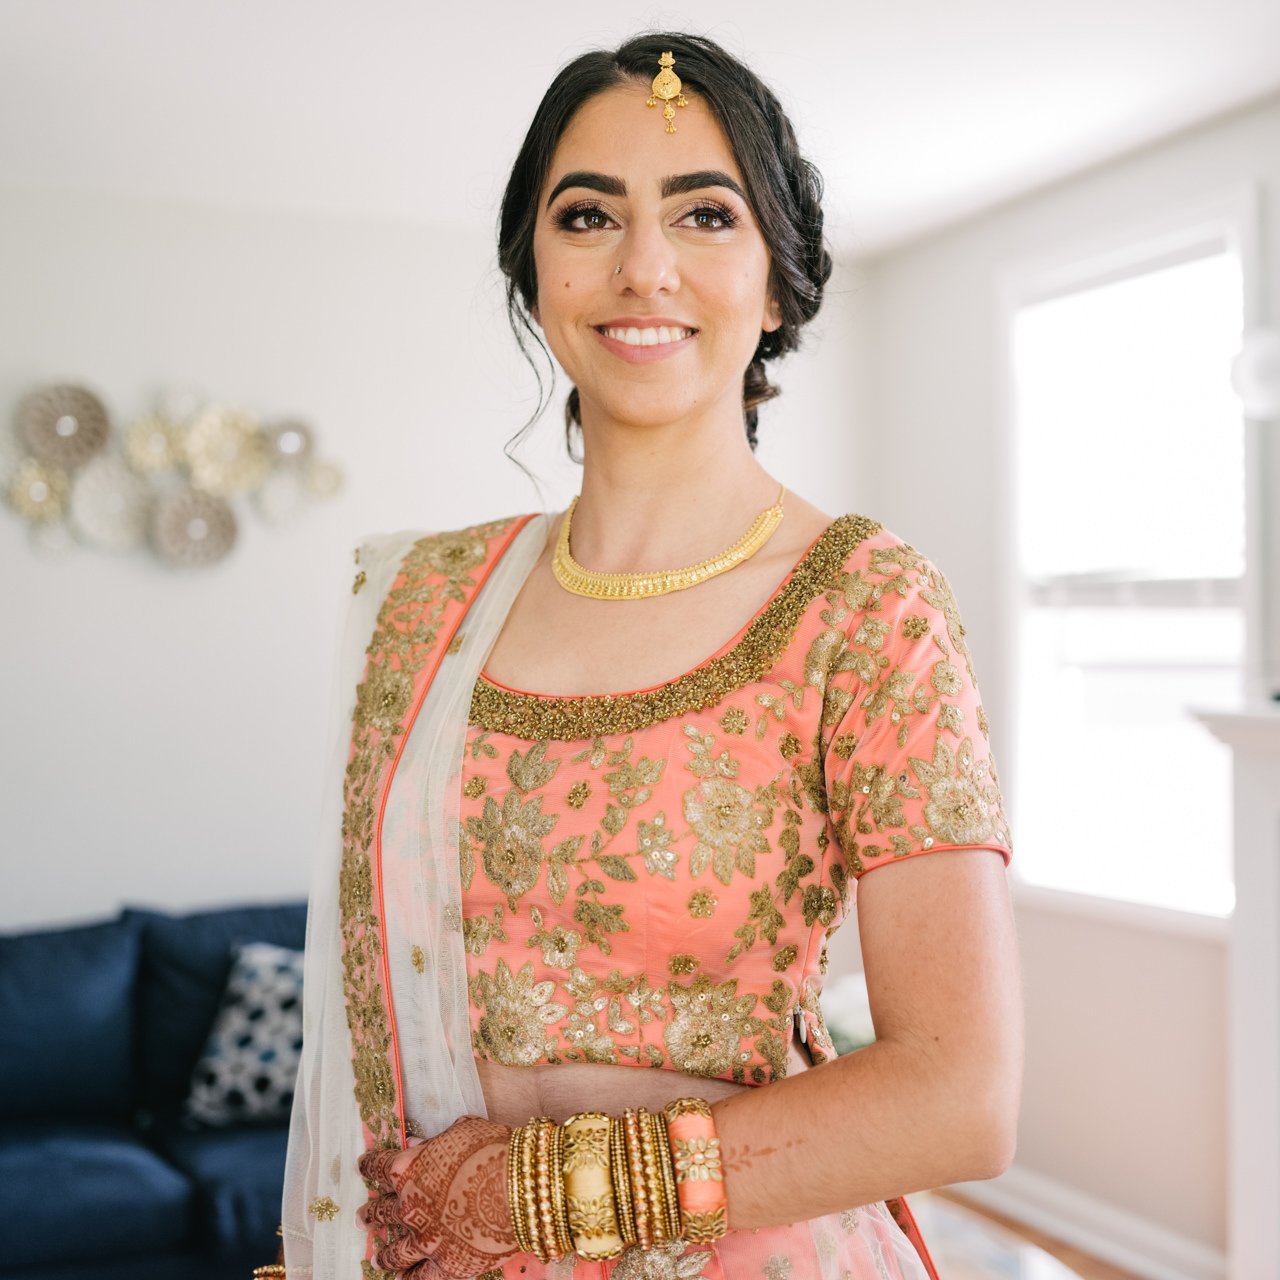  Window light portrait of bride in orange pink sari and gold jewelry 